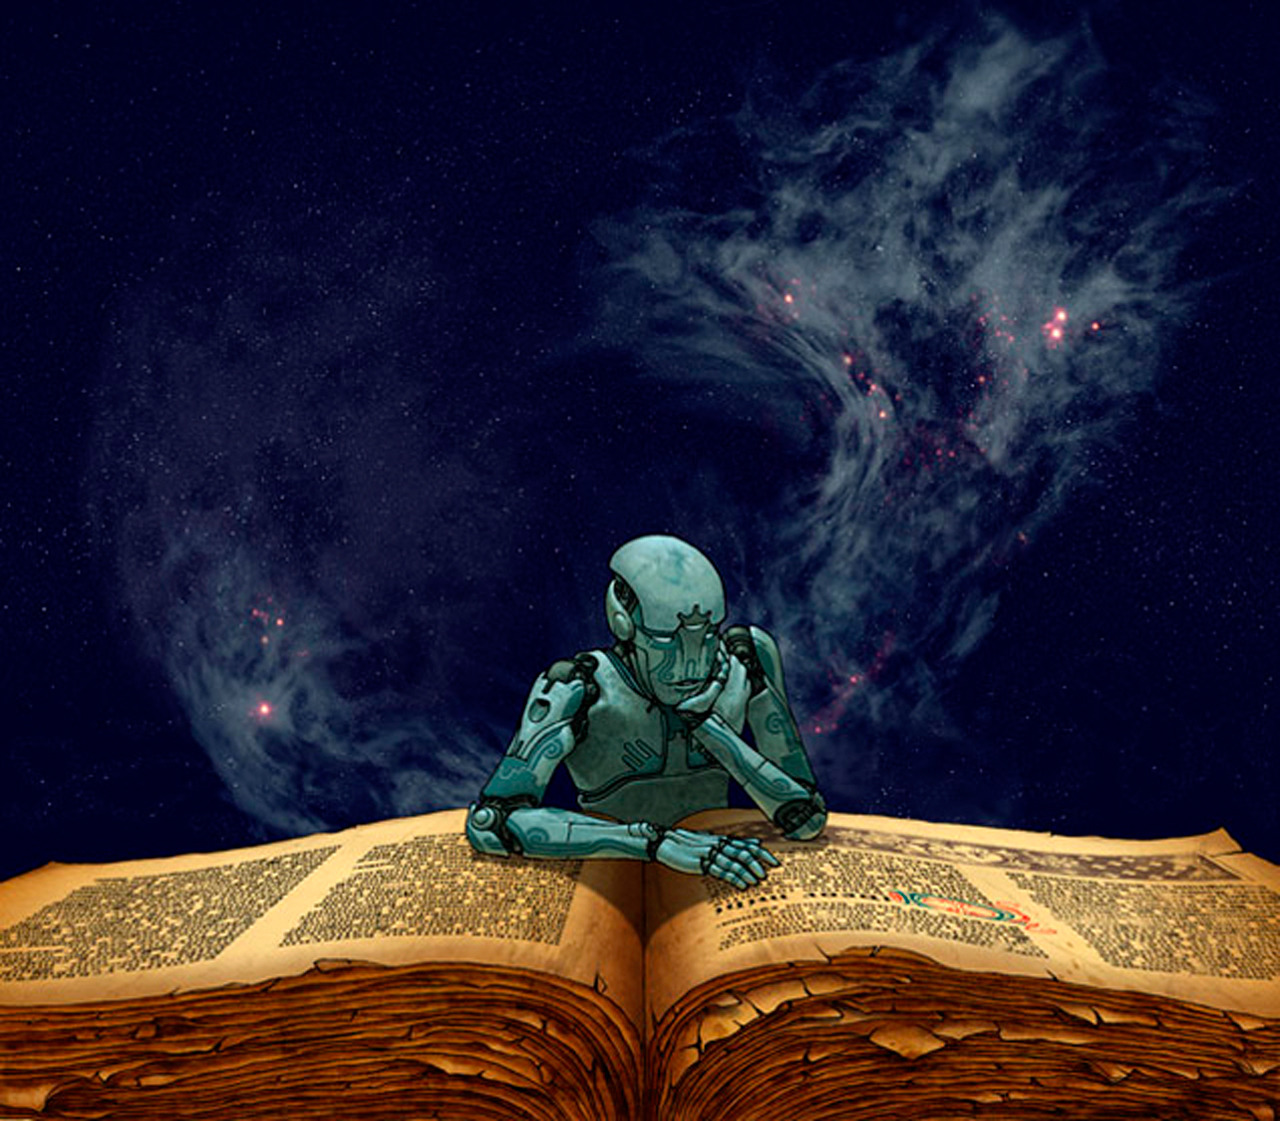 La magia de los libros - Página 2 Tumblr_ltdq7dmlNe1qhttpto1_r1_1280